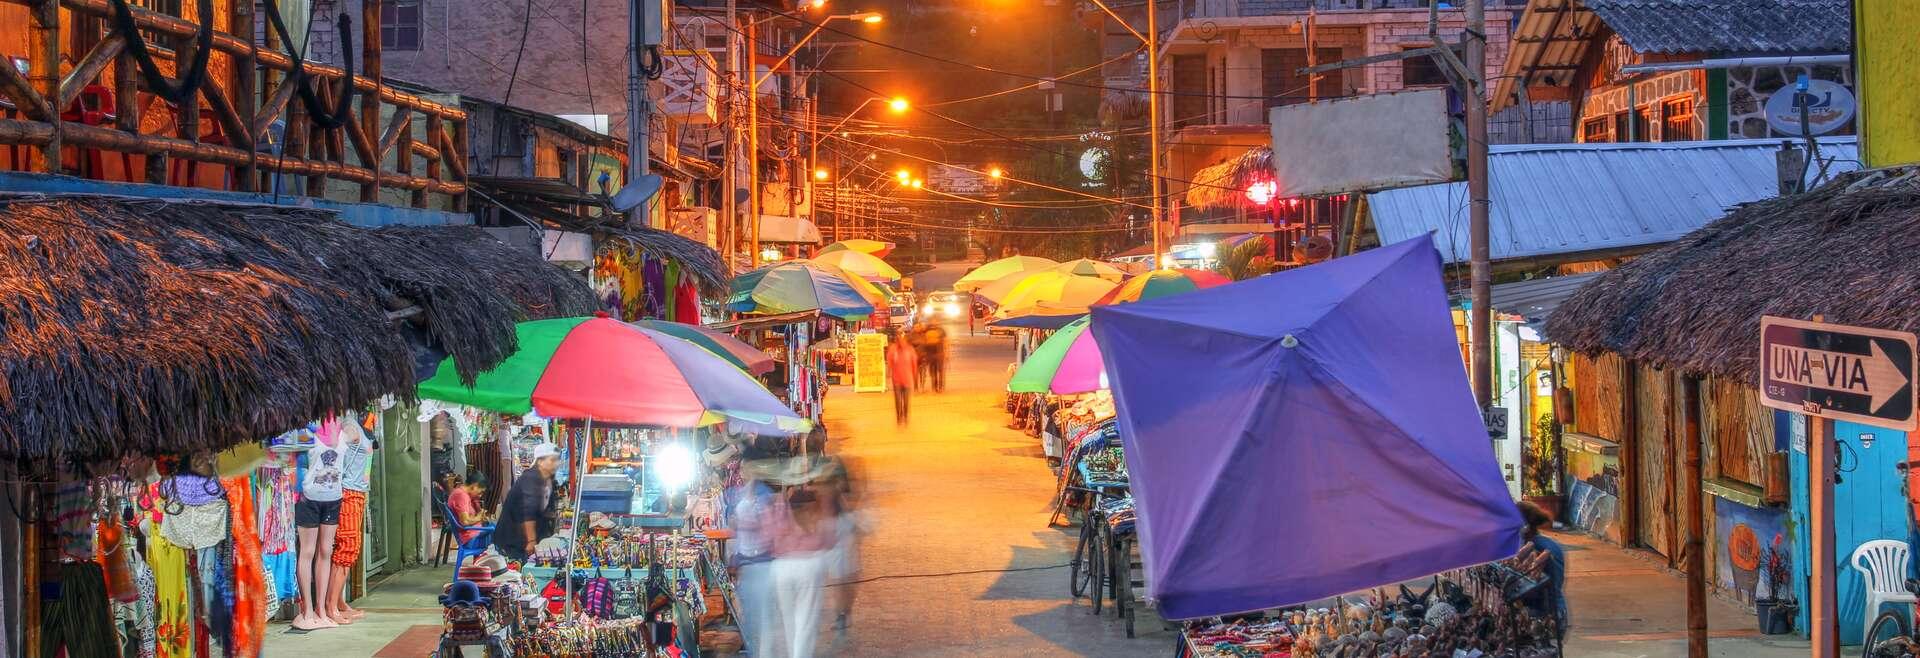 Night scene with street market in the small resort town of Montanita, Ecuador